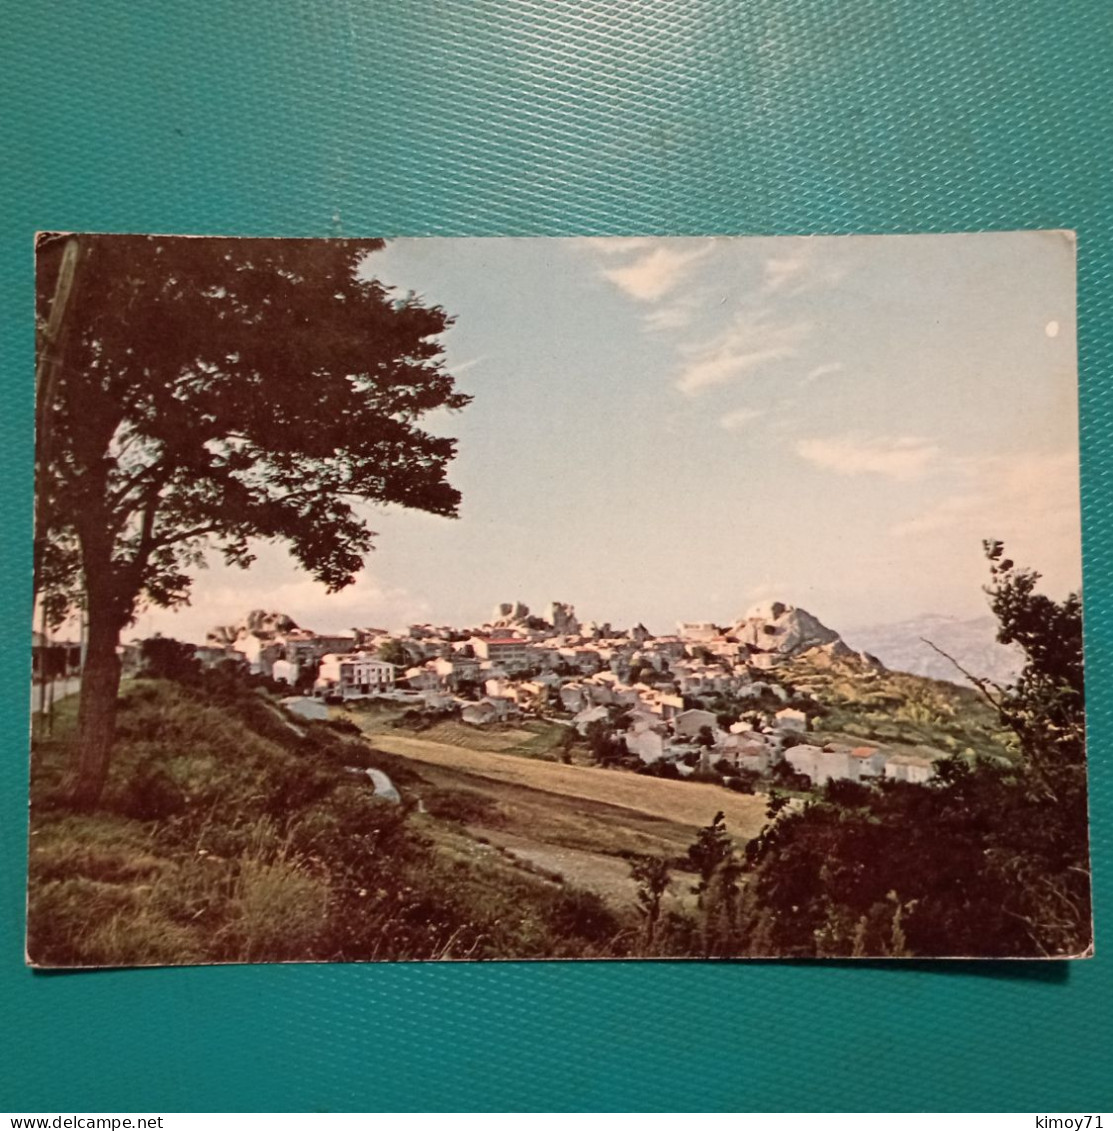 Cartolina Pietrabbondante (Isernia) - M. 1050 - Panorama. Non Viaggiata - Isernia